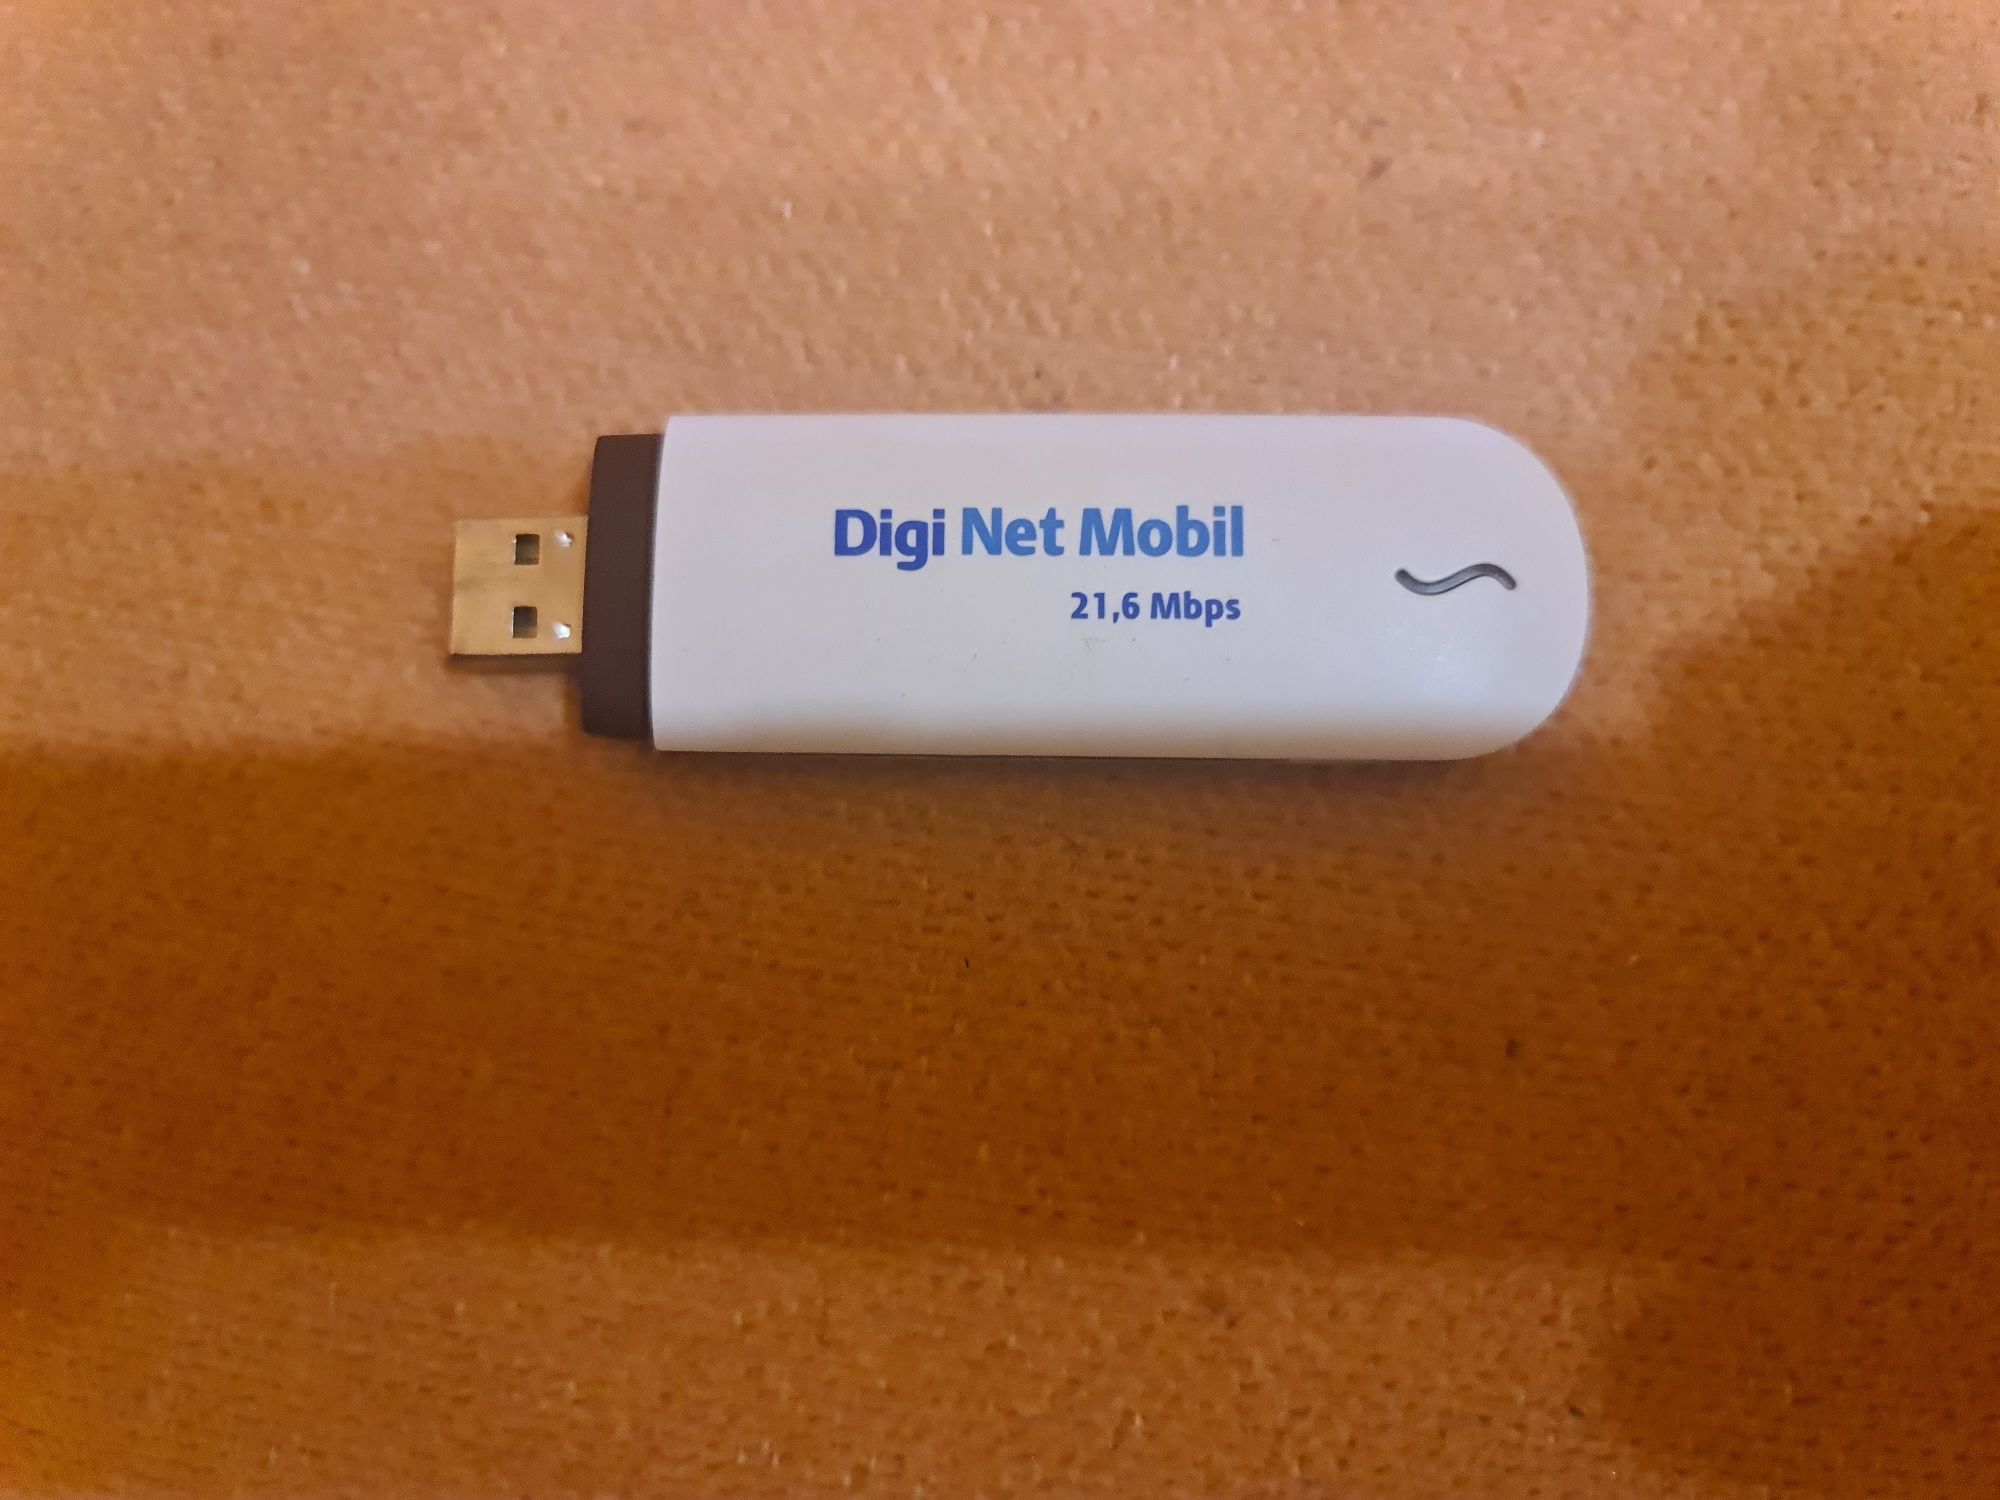 Stick modem digi net mobil 21.6 Mbps